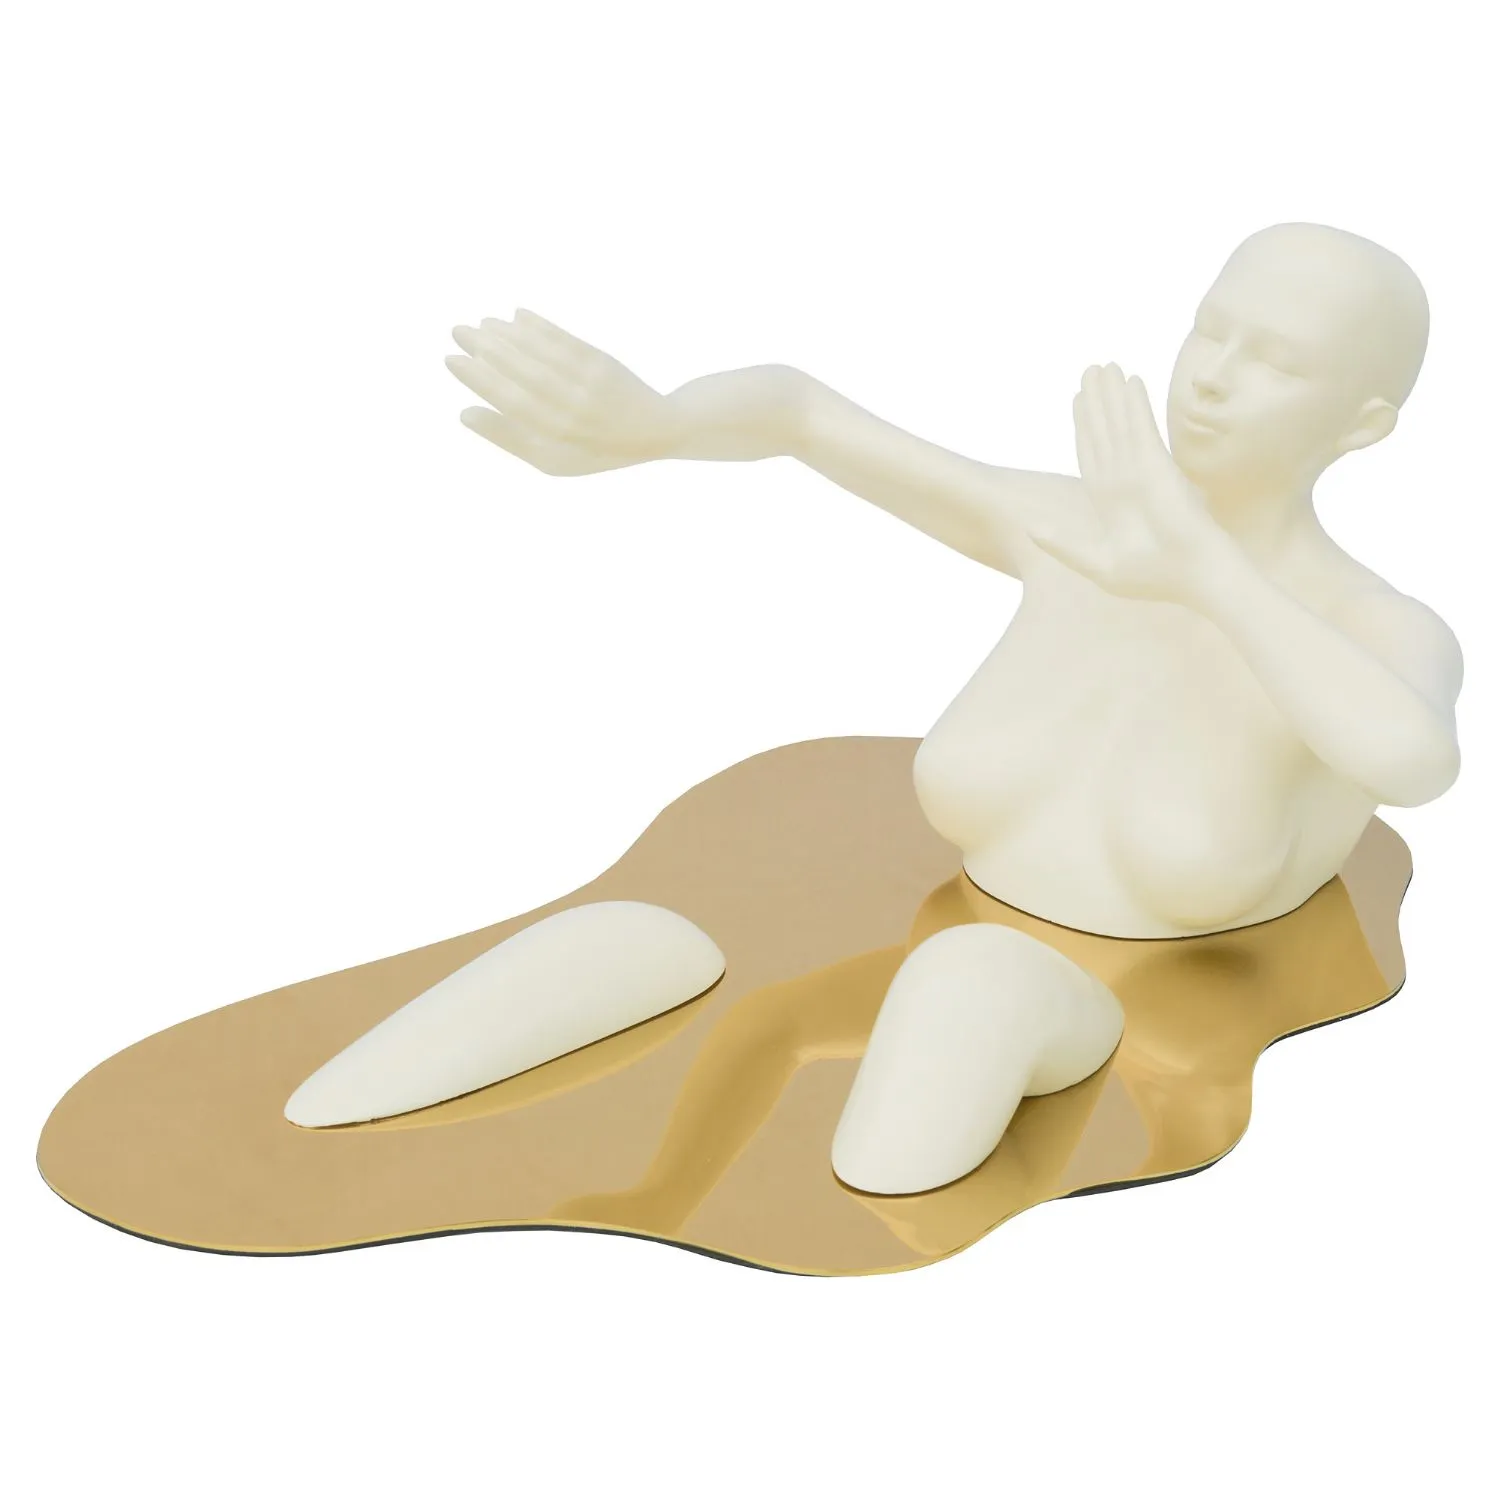 Bathing Lady Sculpture – Cream